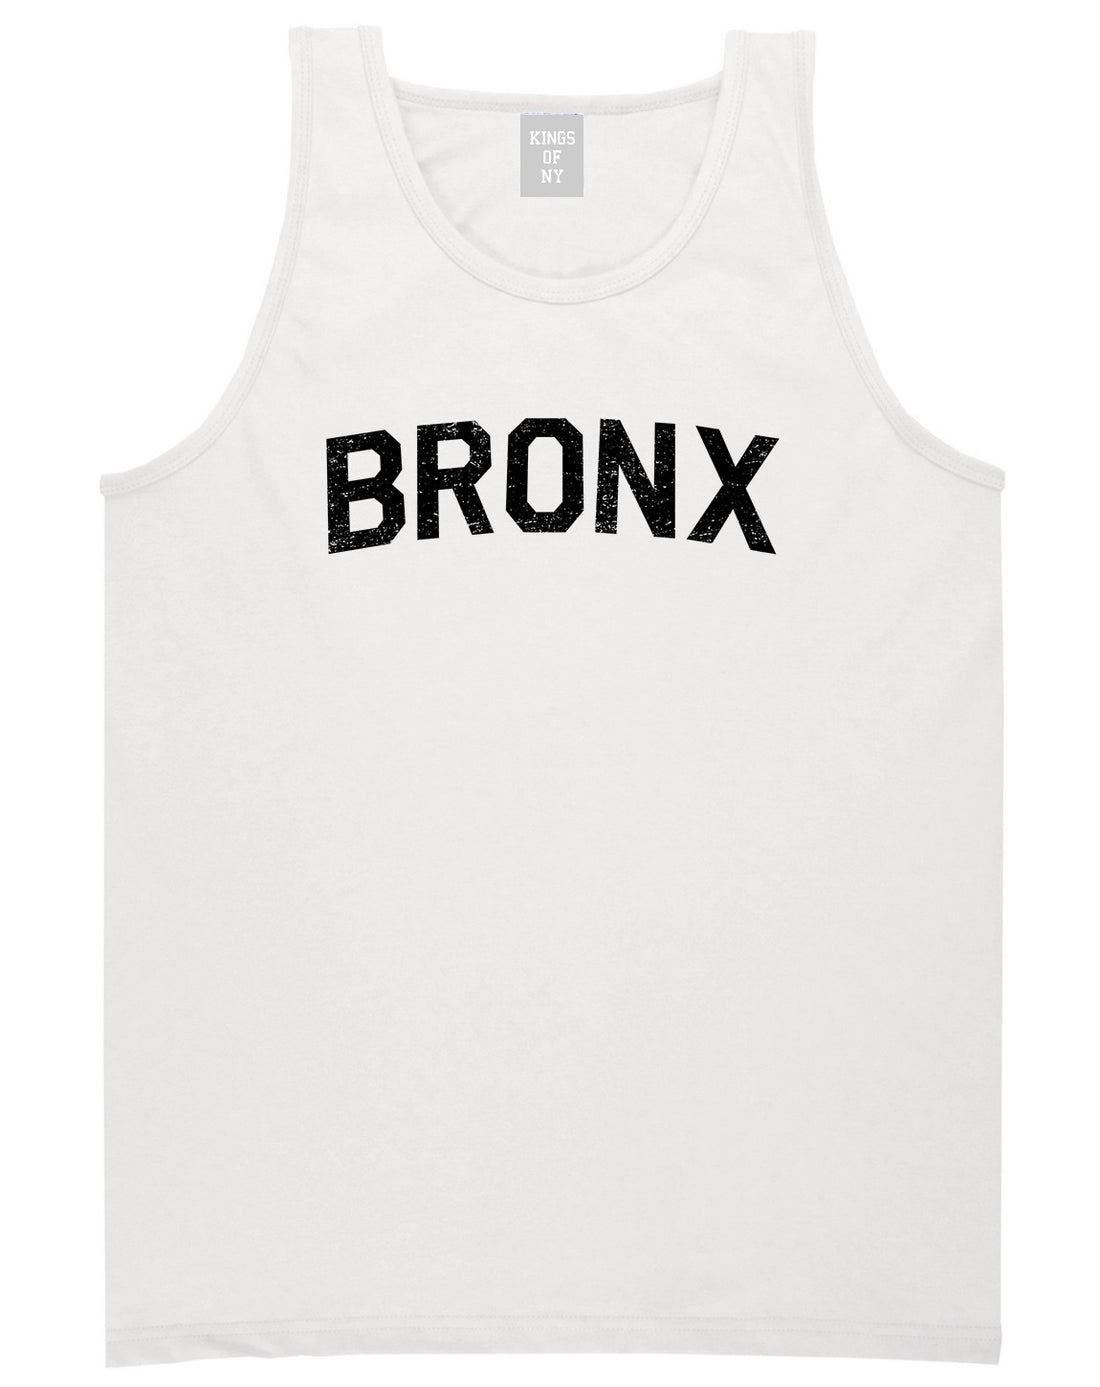 Vintage Bronx New York Mens Tank Top T-Shirt White